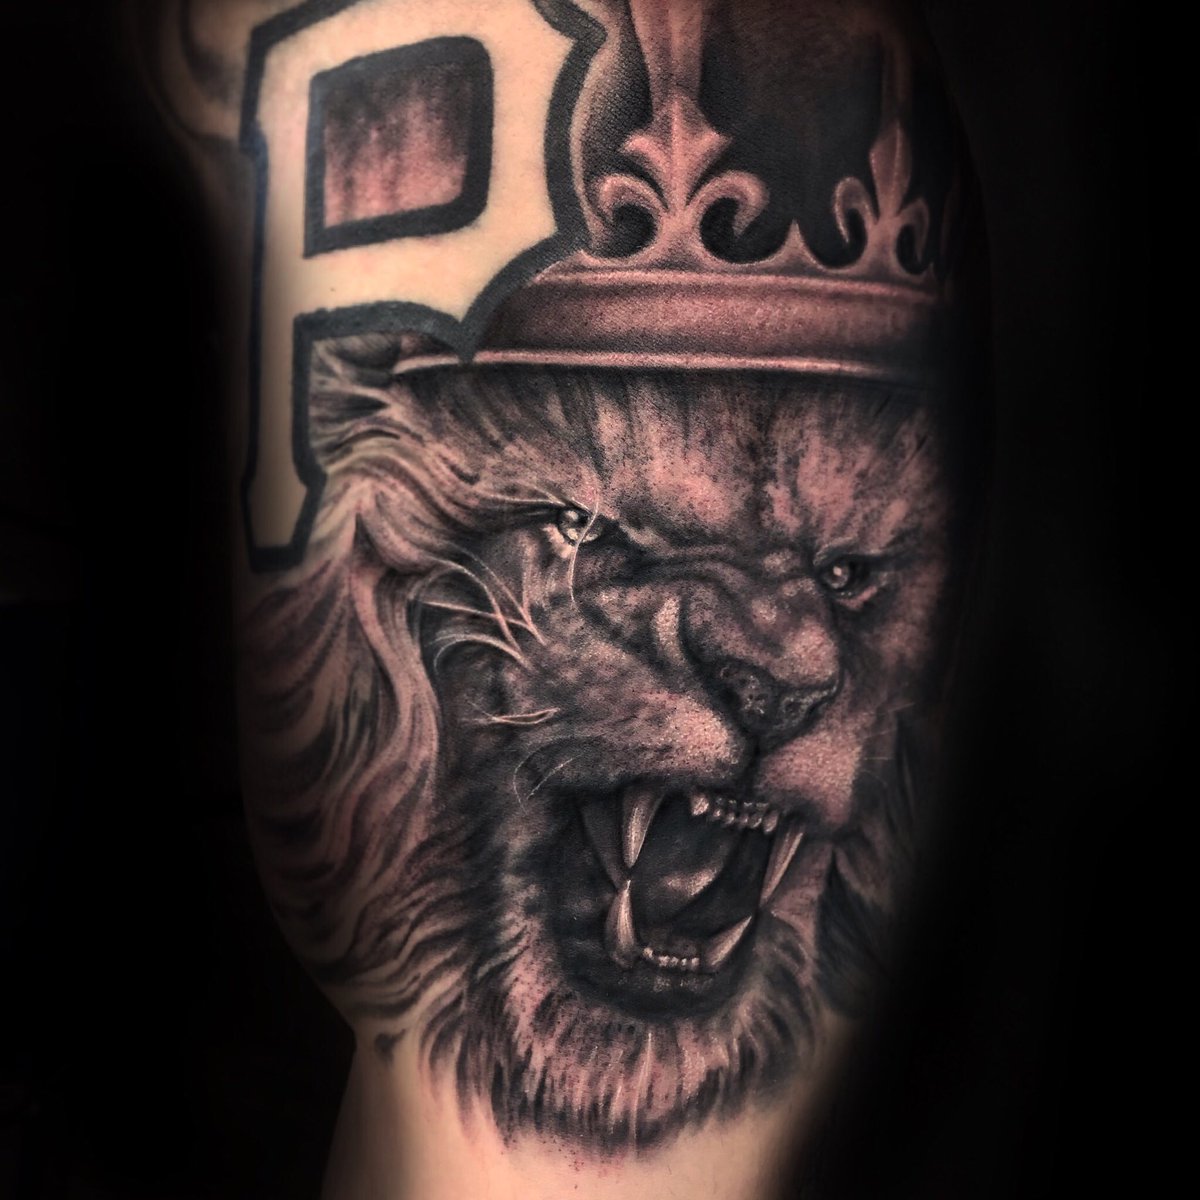 King of the Jungle

•••••••••••••••••••••••••

#tattoo #inkaddict #peakneedles #empireinks #lion #liontattoo #blackandgreytattoo #tattoosleeve #tattooartist #tattooedmen #guyswithtattoos #tattooedguys #texas #texastattoo #texasinked